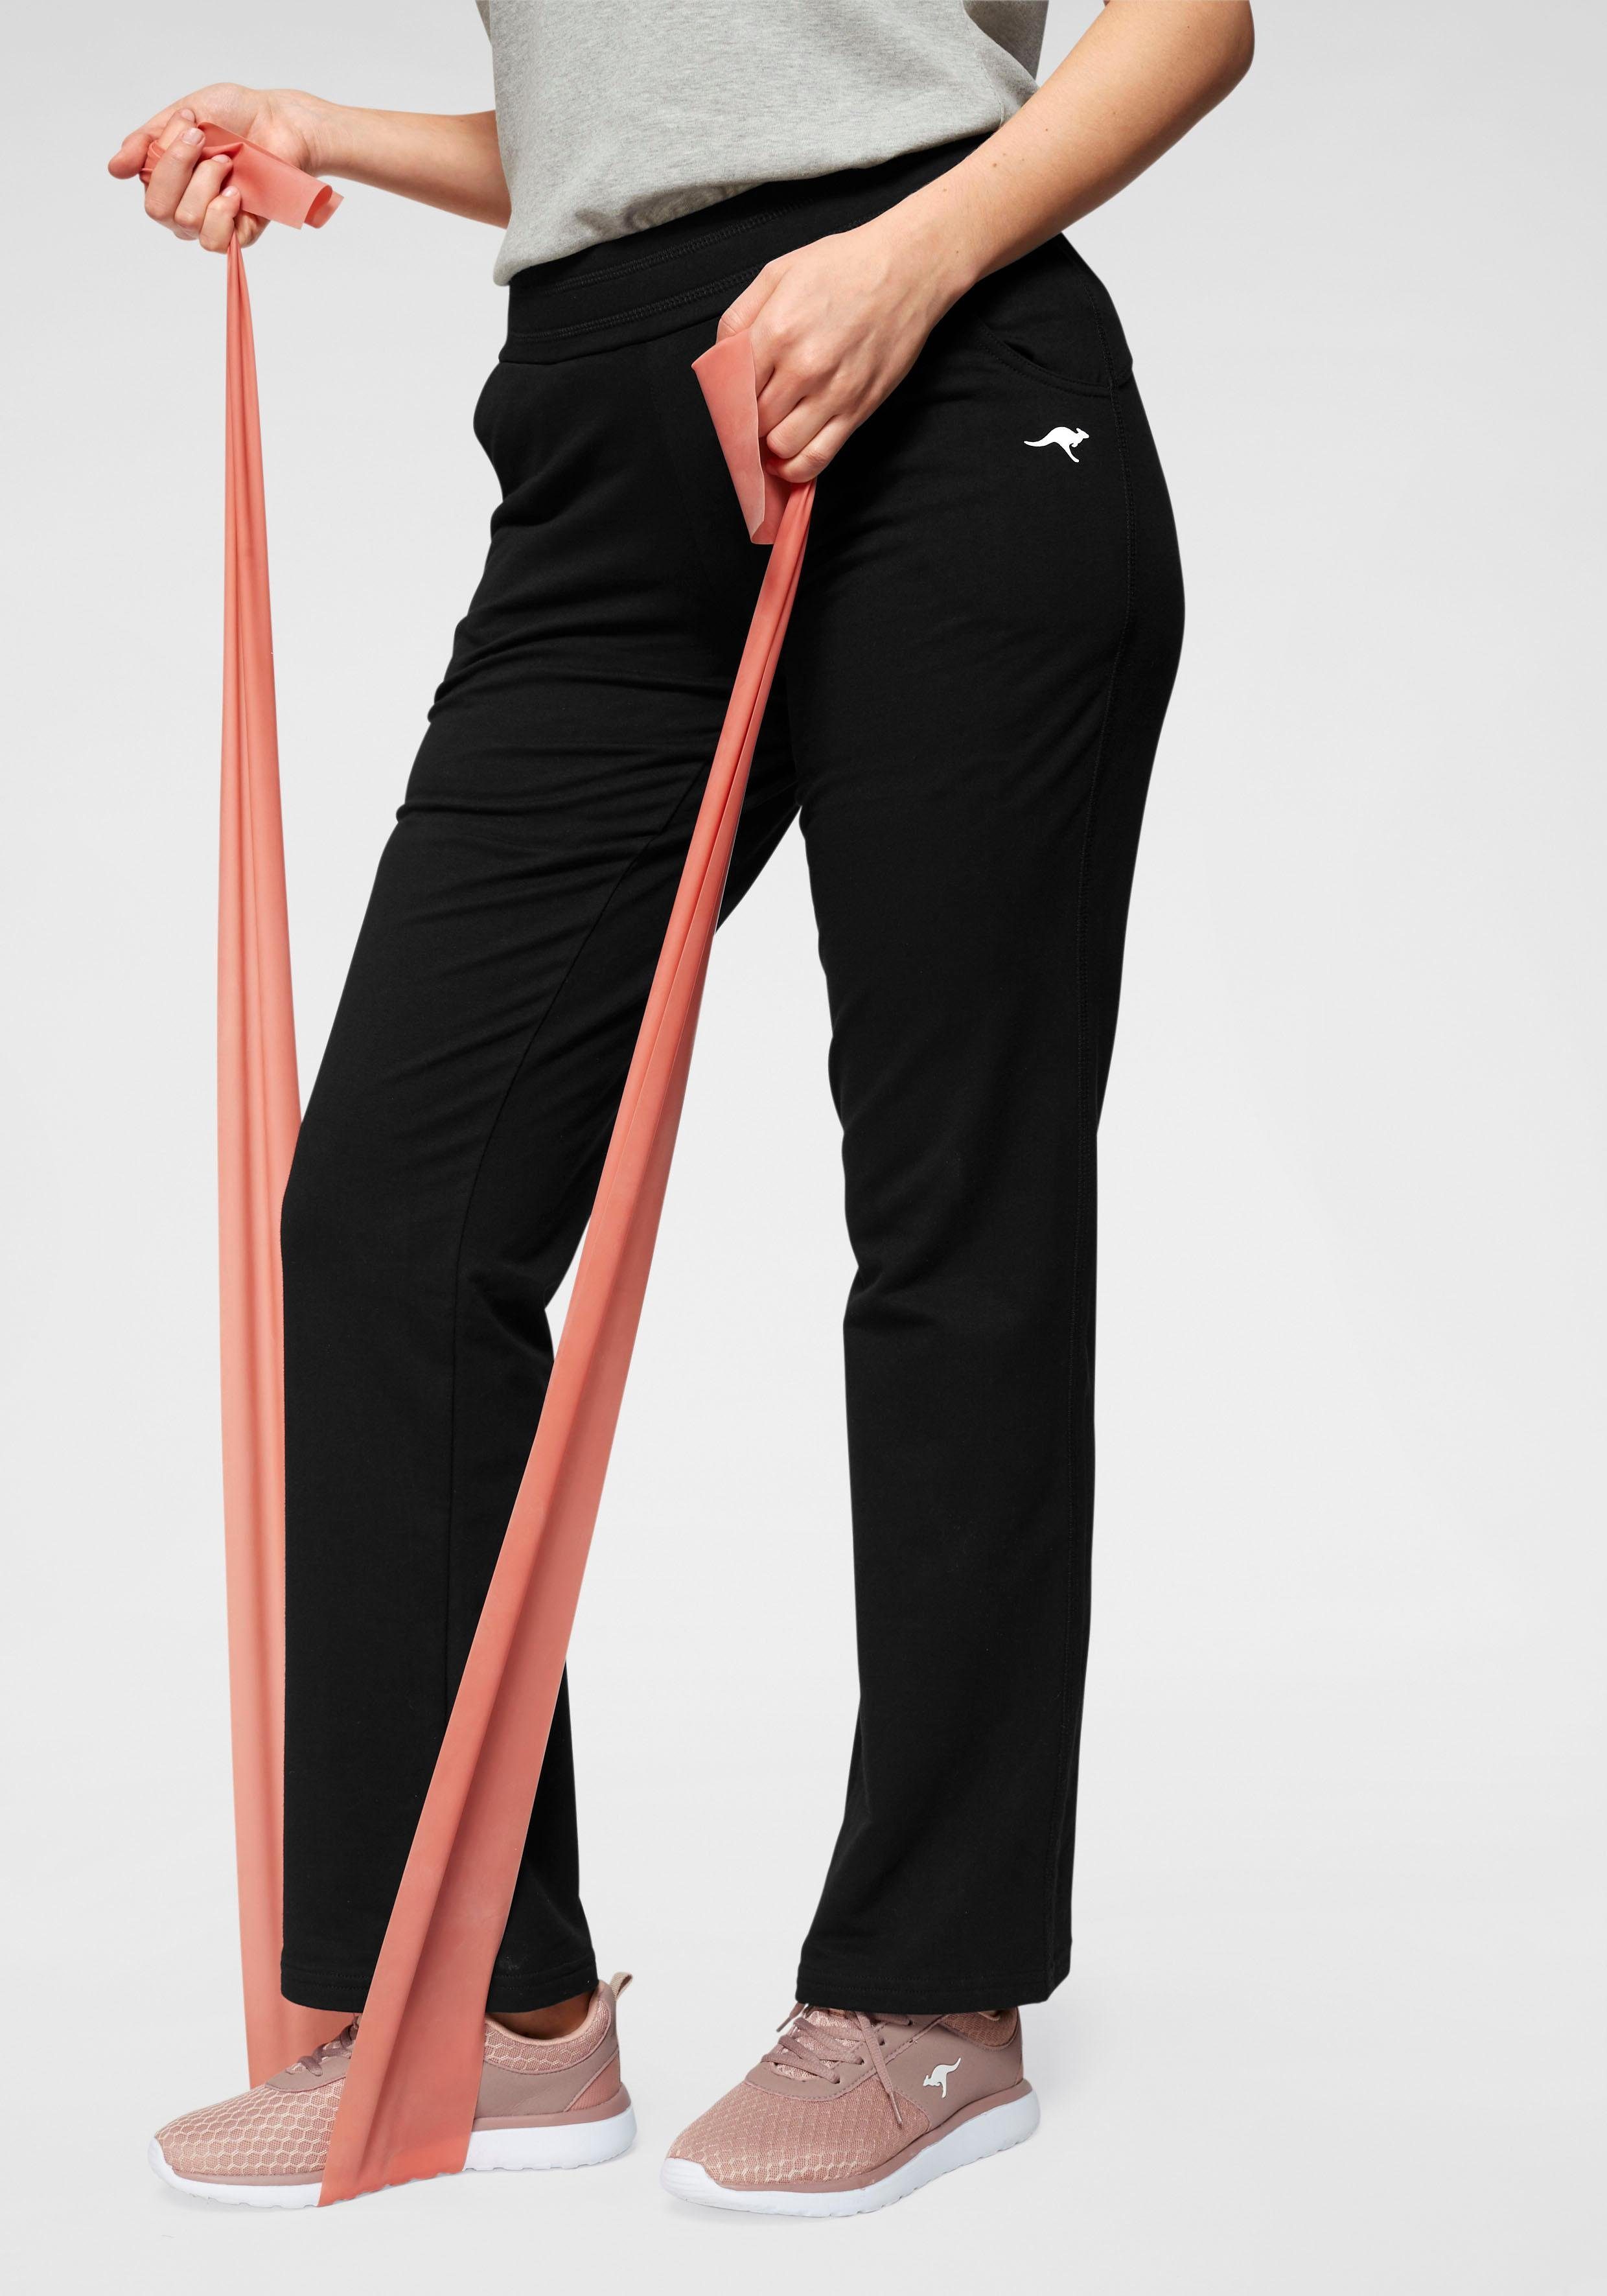 KangaROOS Damen Jogginghosen online kaufen » Sweatpants | OTTO